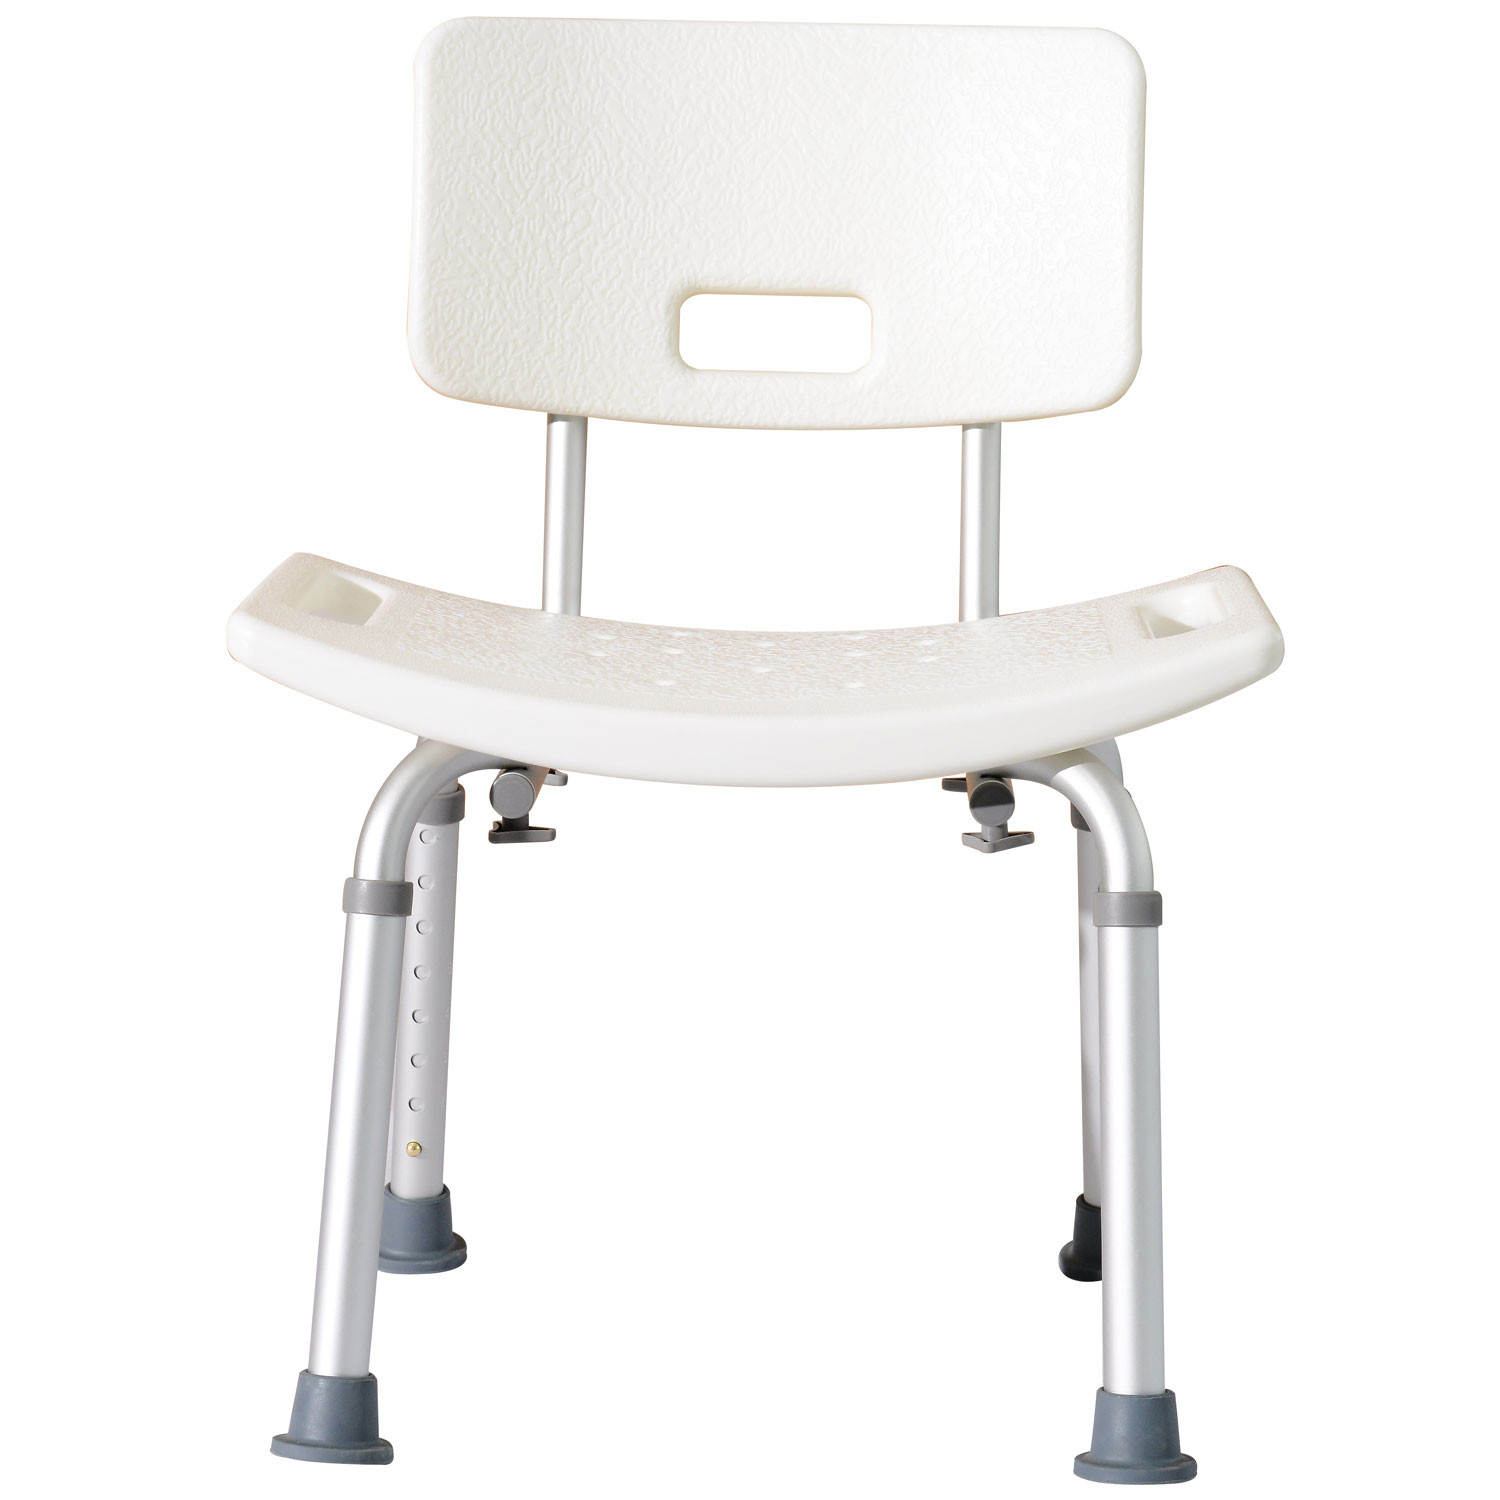 medical shower chair medical bath bench shower chair